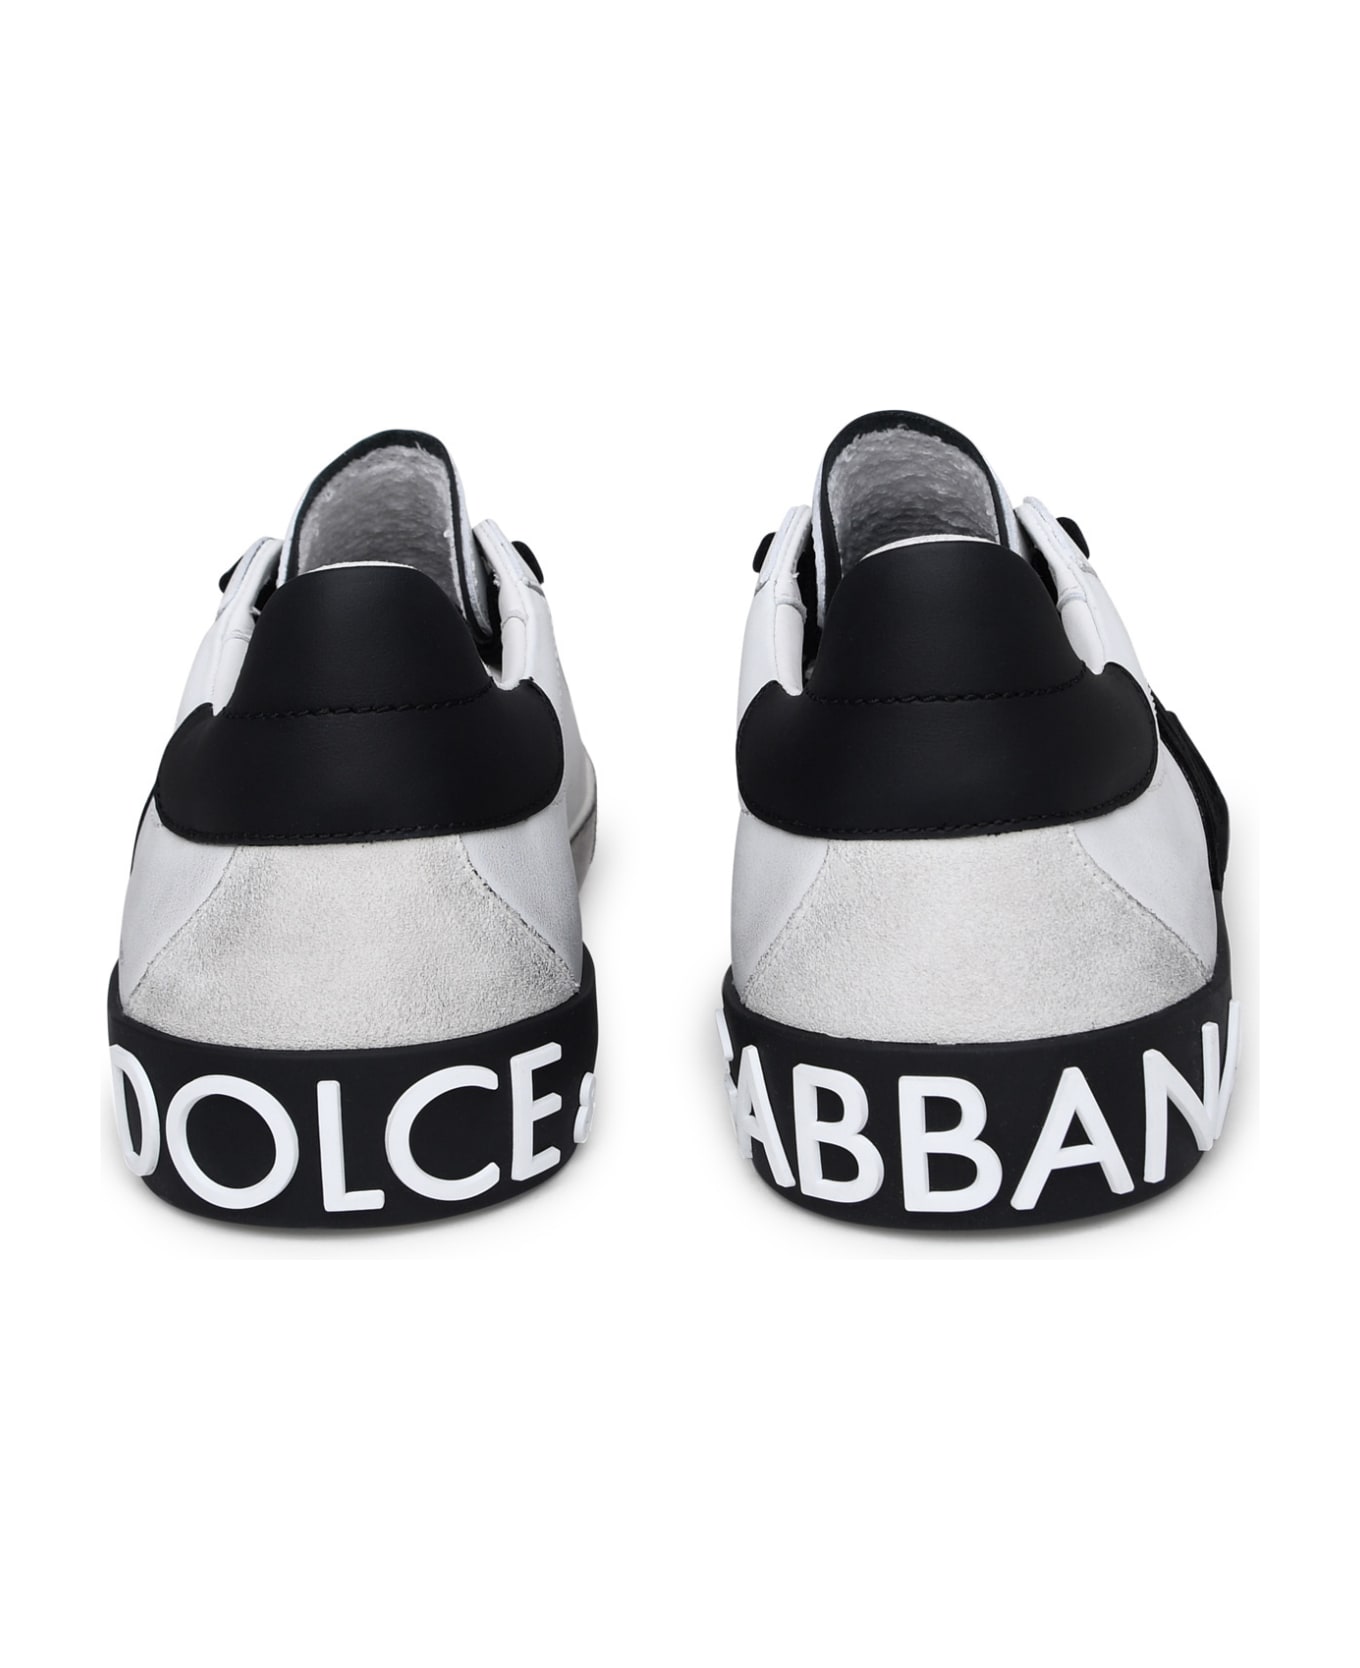 Dolce & Gabbana Leather Sneakers - BIANCO/NERO スニーカー